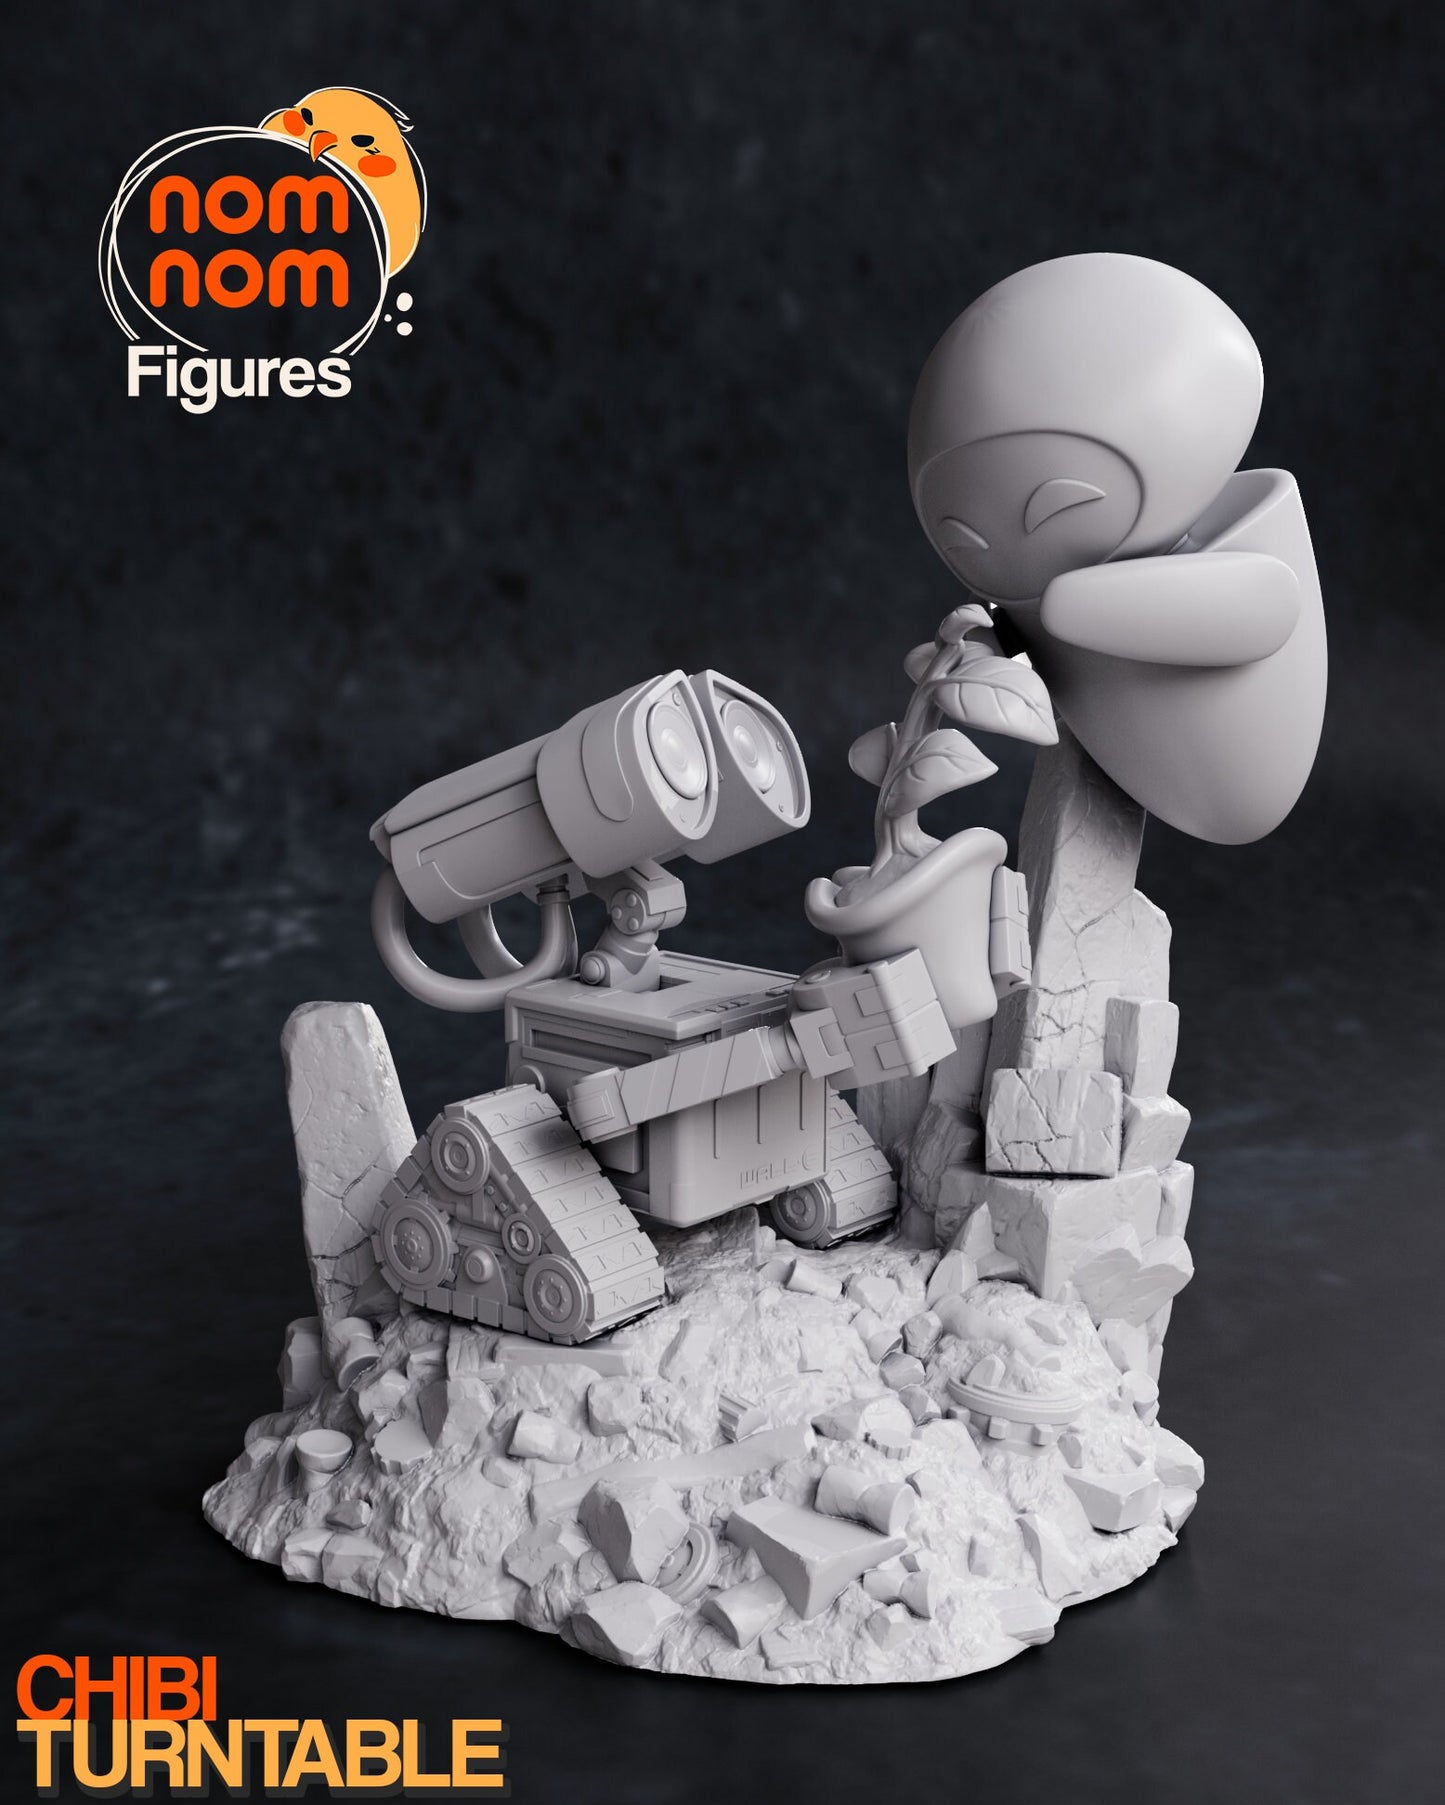 Chibi Garbage & Space Robots by NomNom Figures | Please Read Description